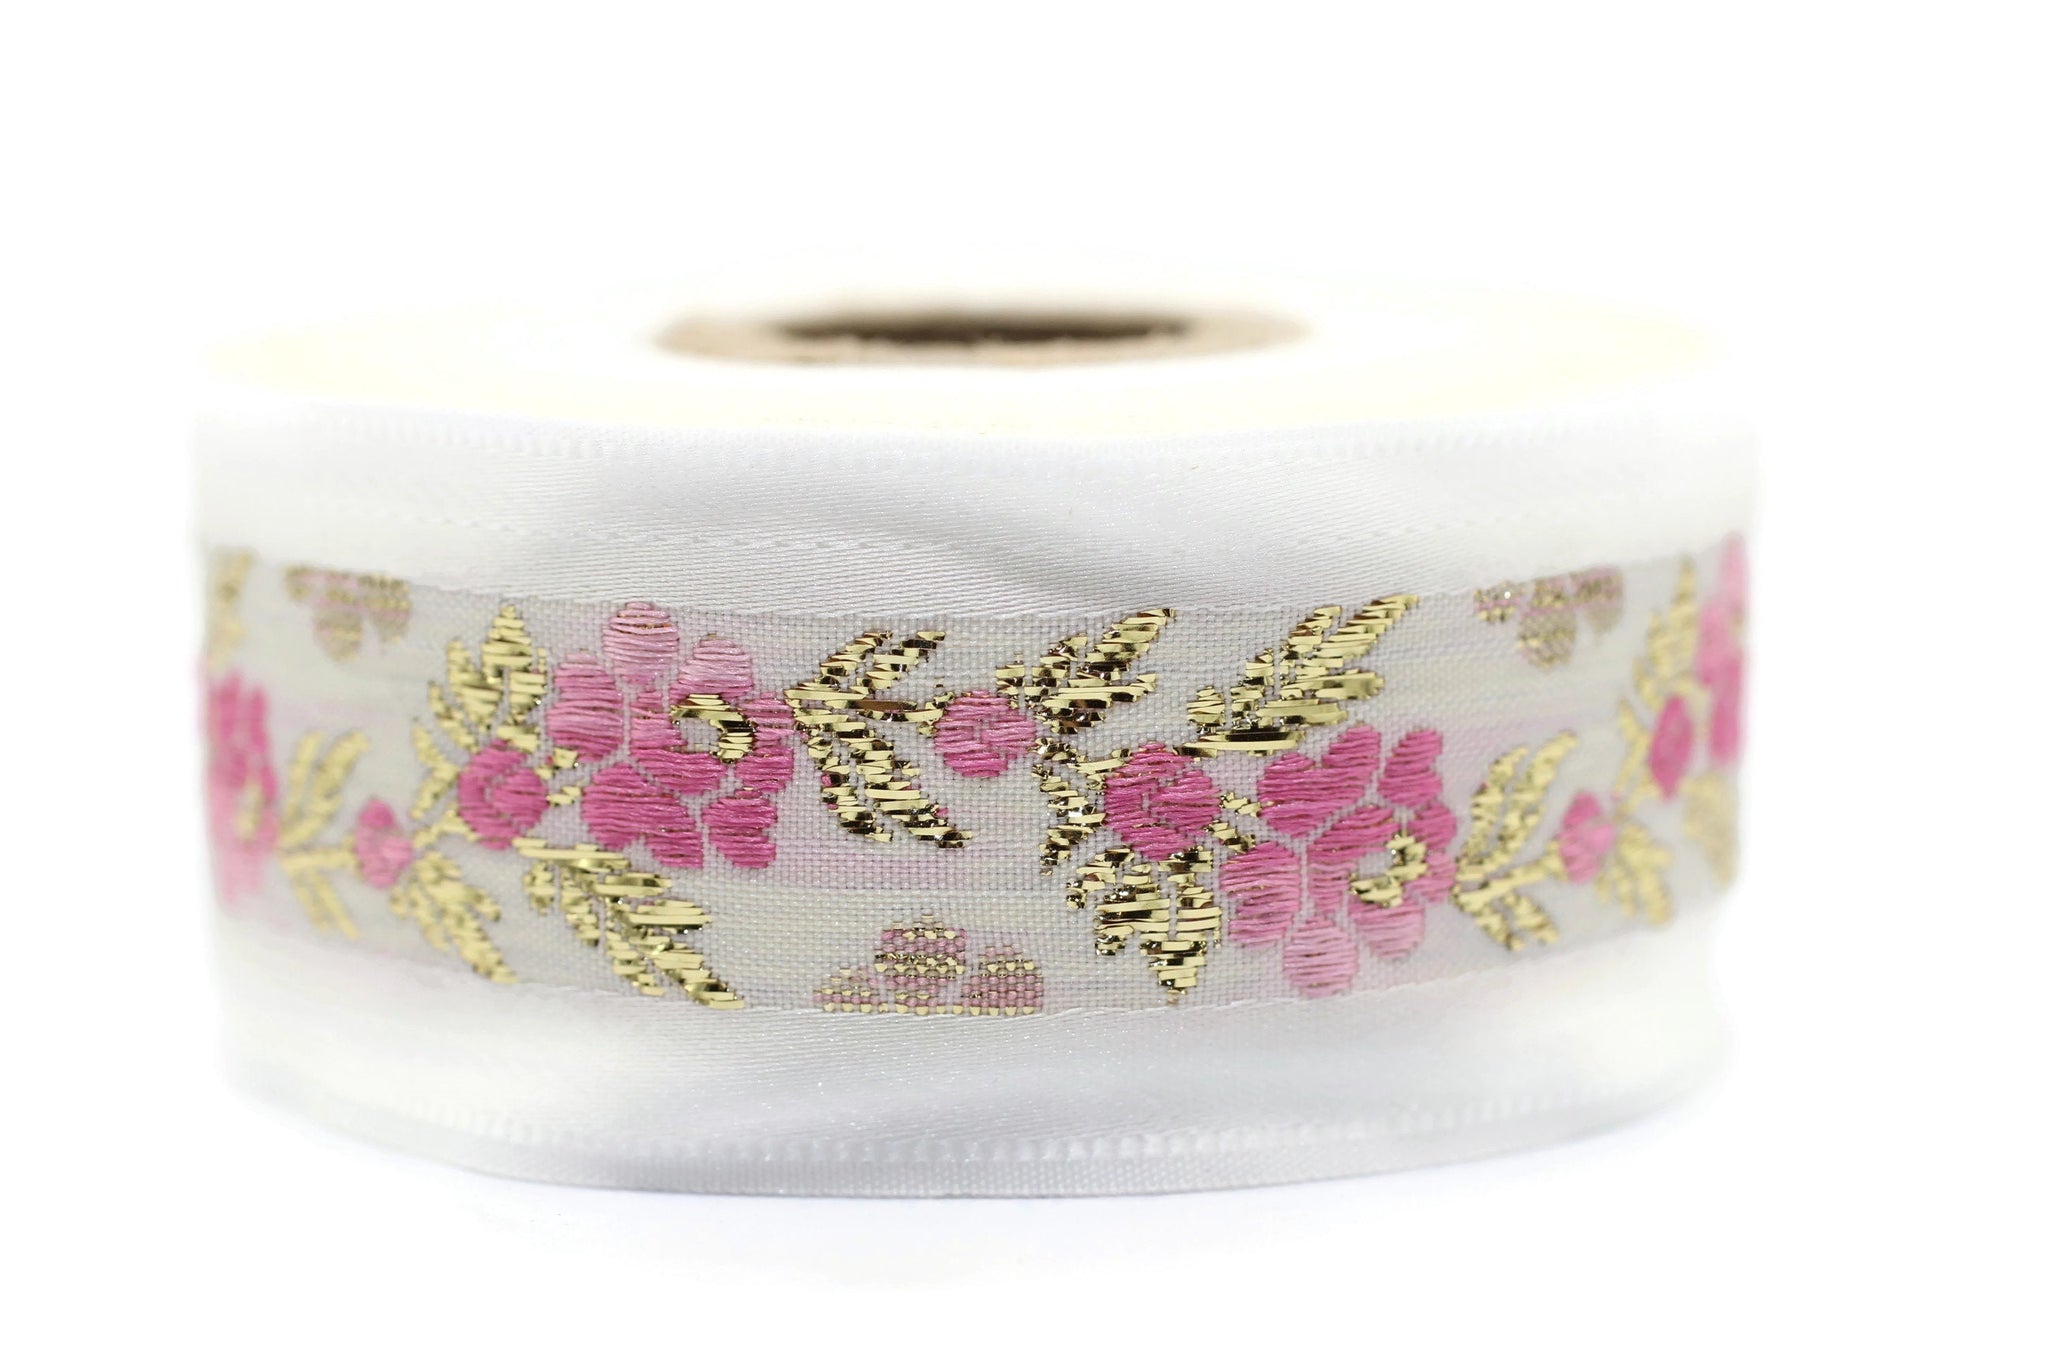 35 mm White Front Pink-Gold Floral Jacquard ribbon (1.37 inches), Jacquard trim, Balkans Decorative Ribbon, Sewing Trim, Collar Trim, 35011